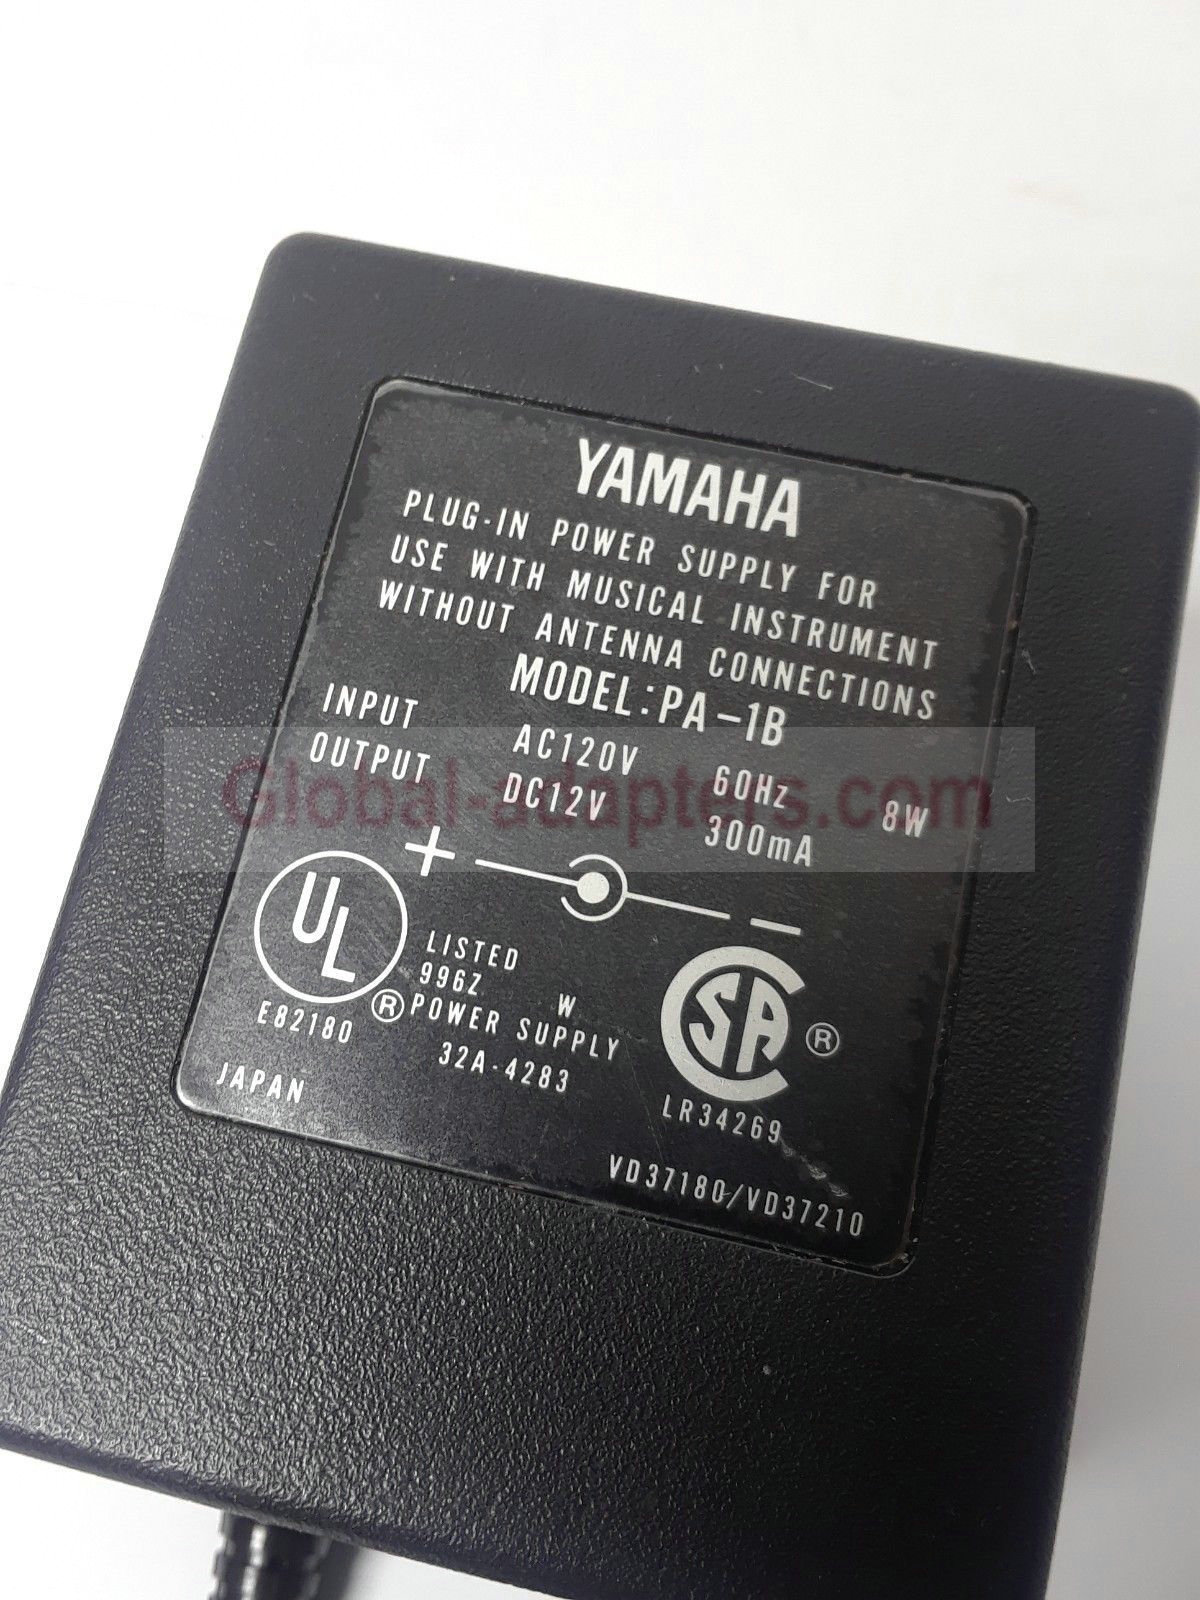 NEW 12V 300mA Yamaha PA-1B Power Supply AC Adapter